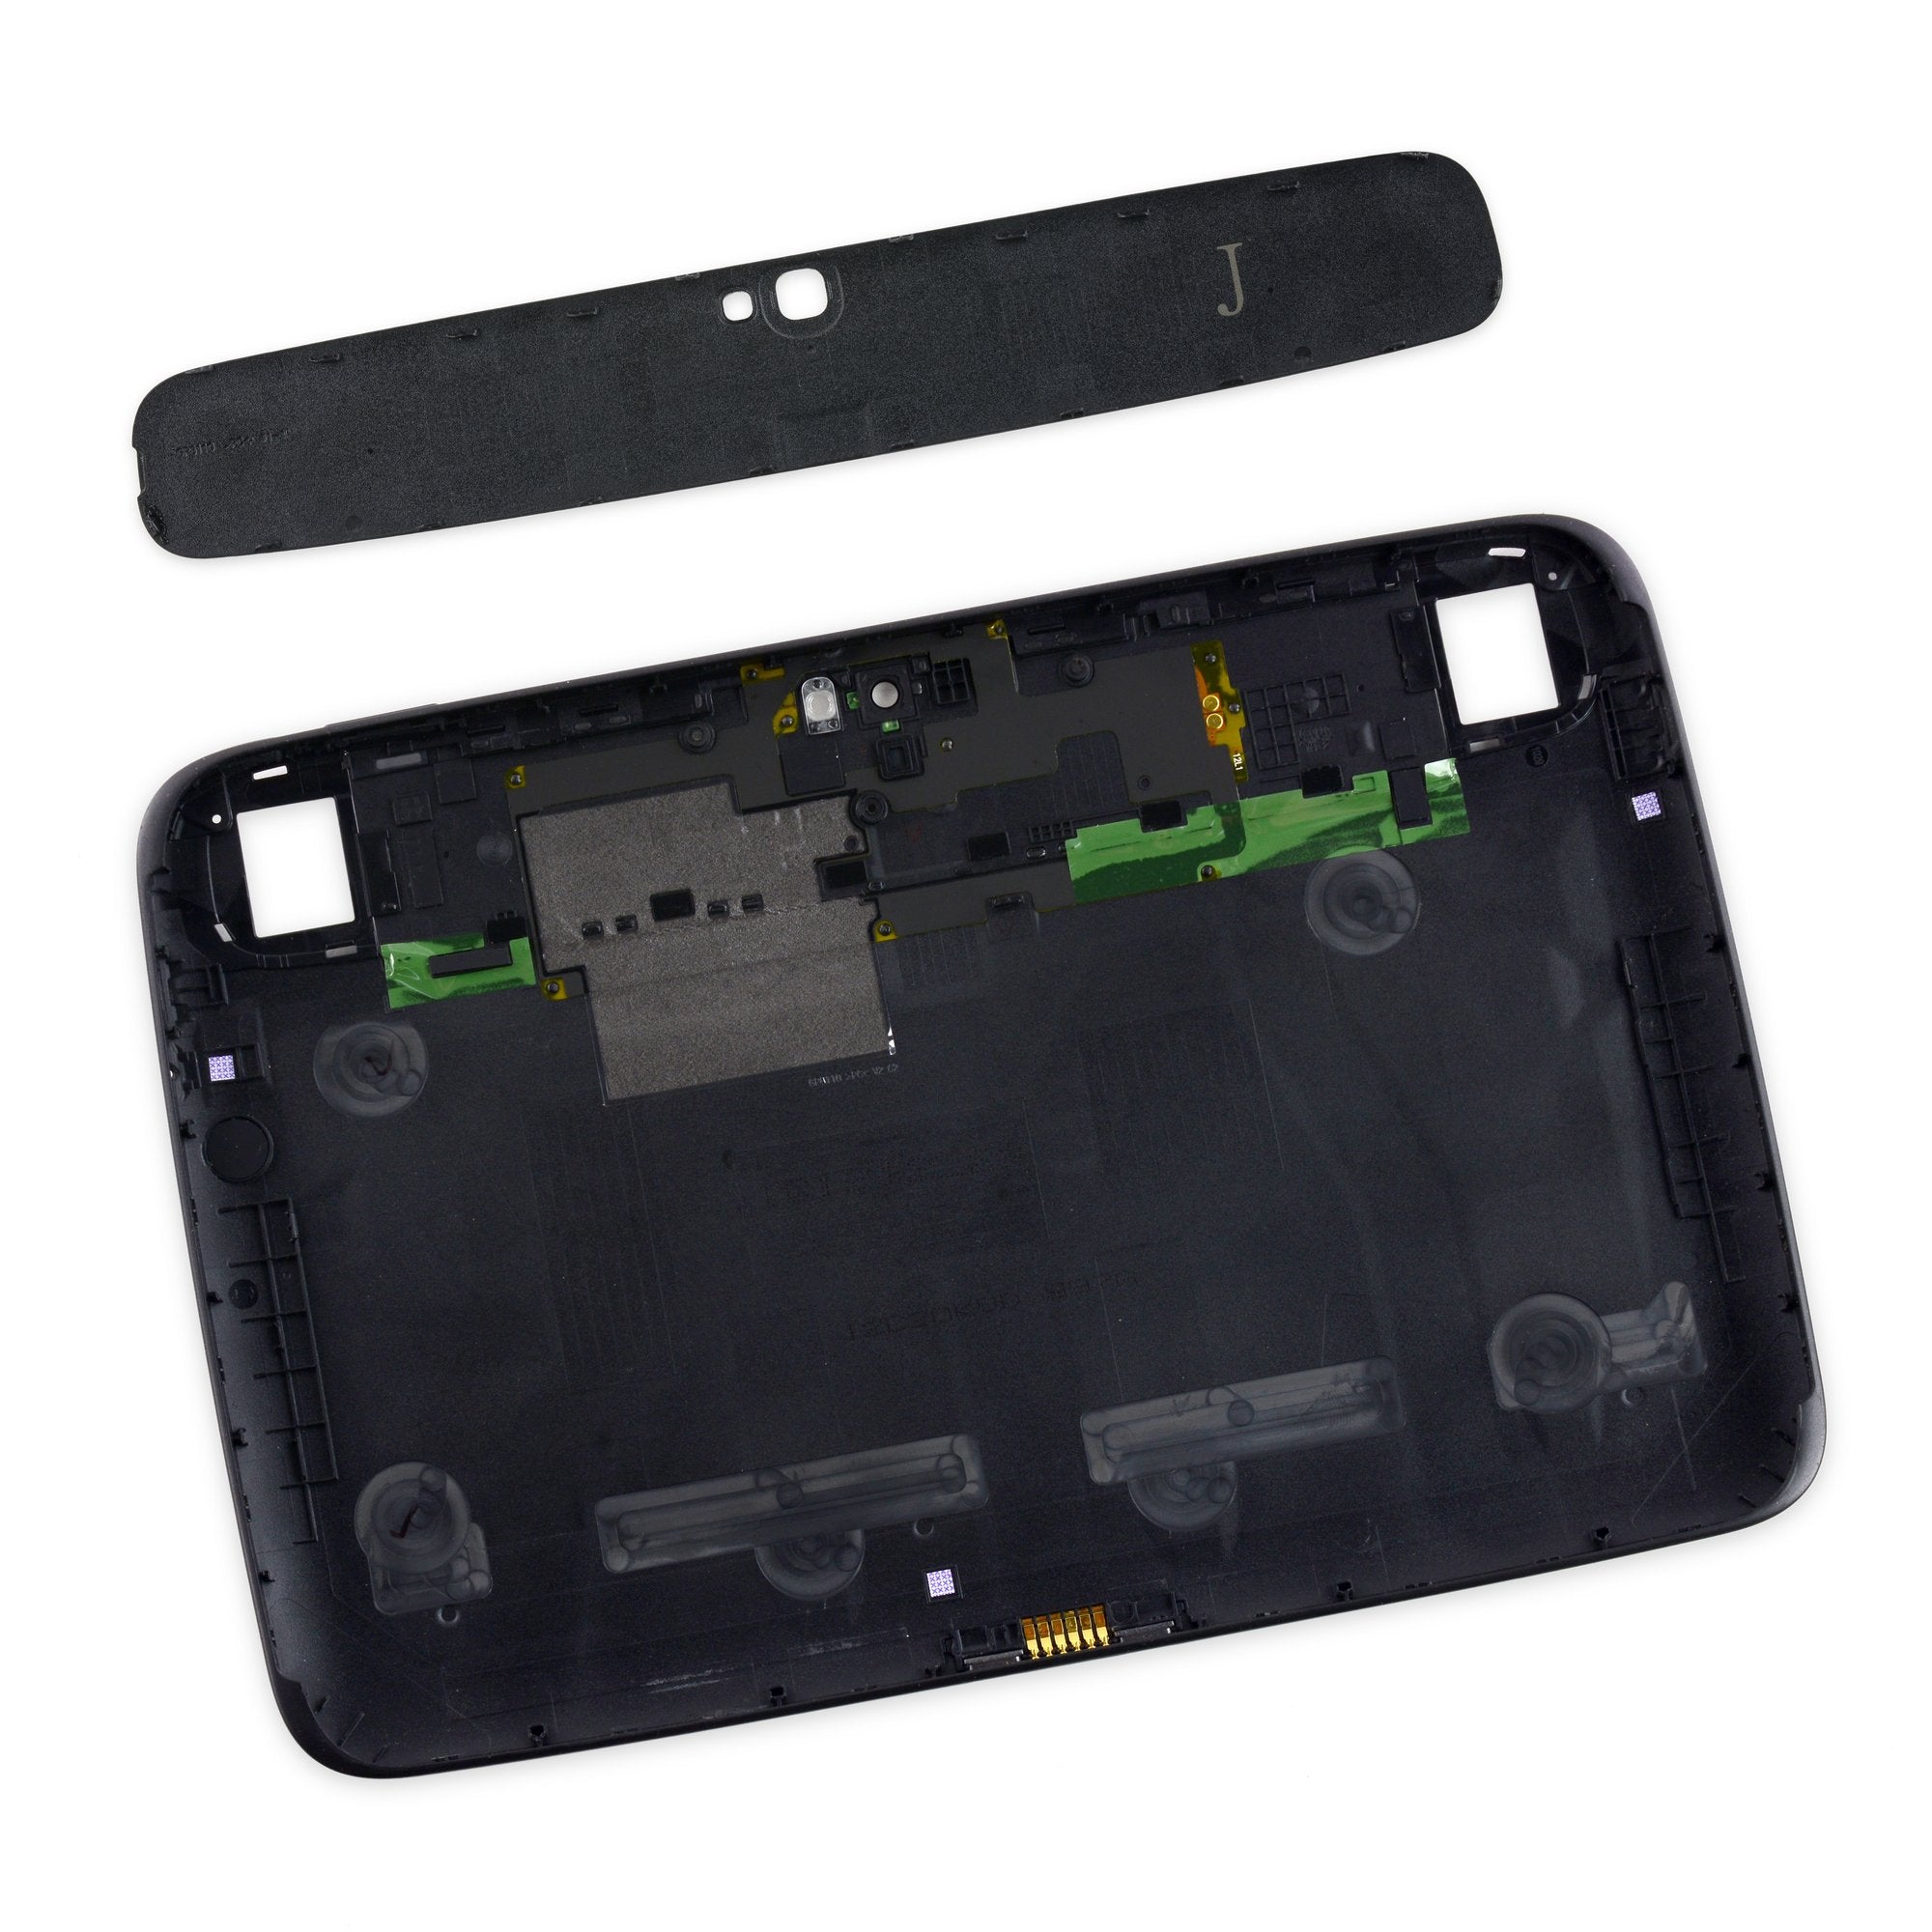 Nexus 10 Rear Panel